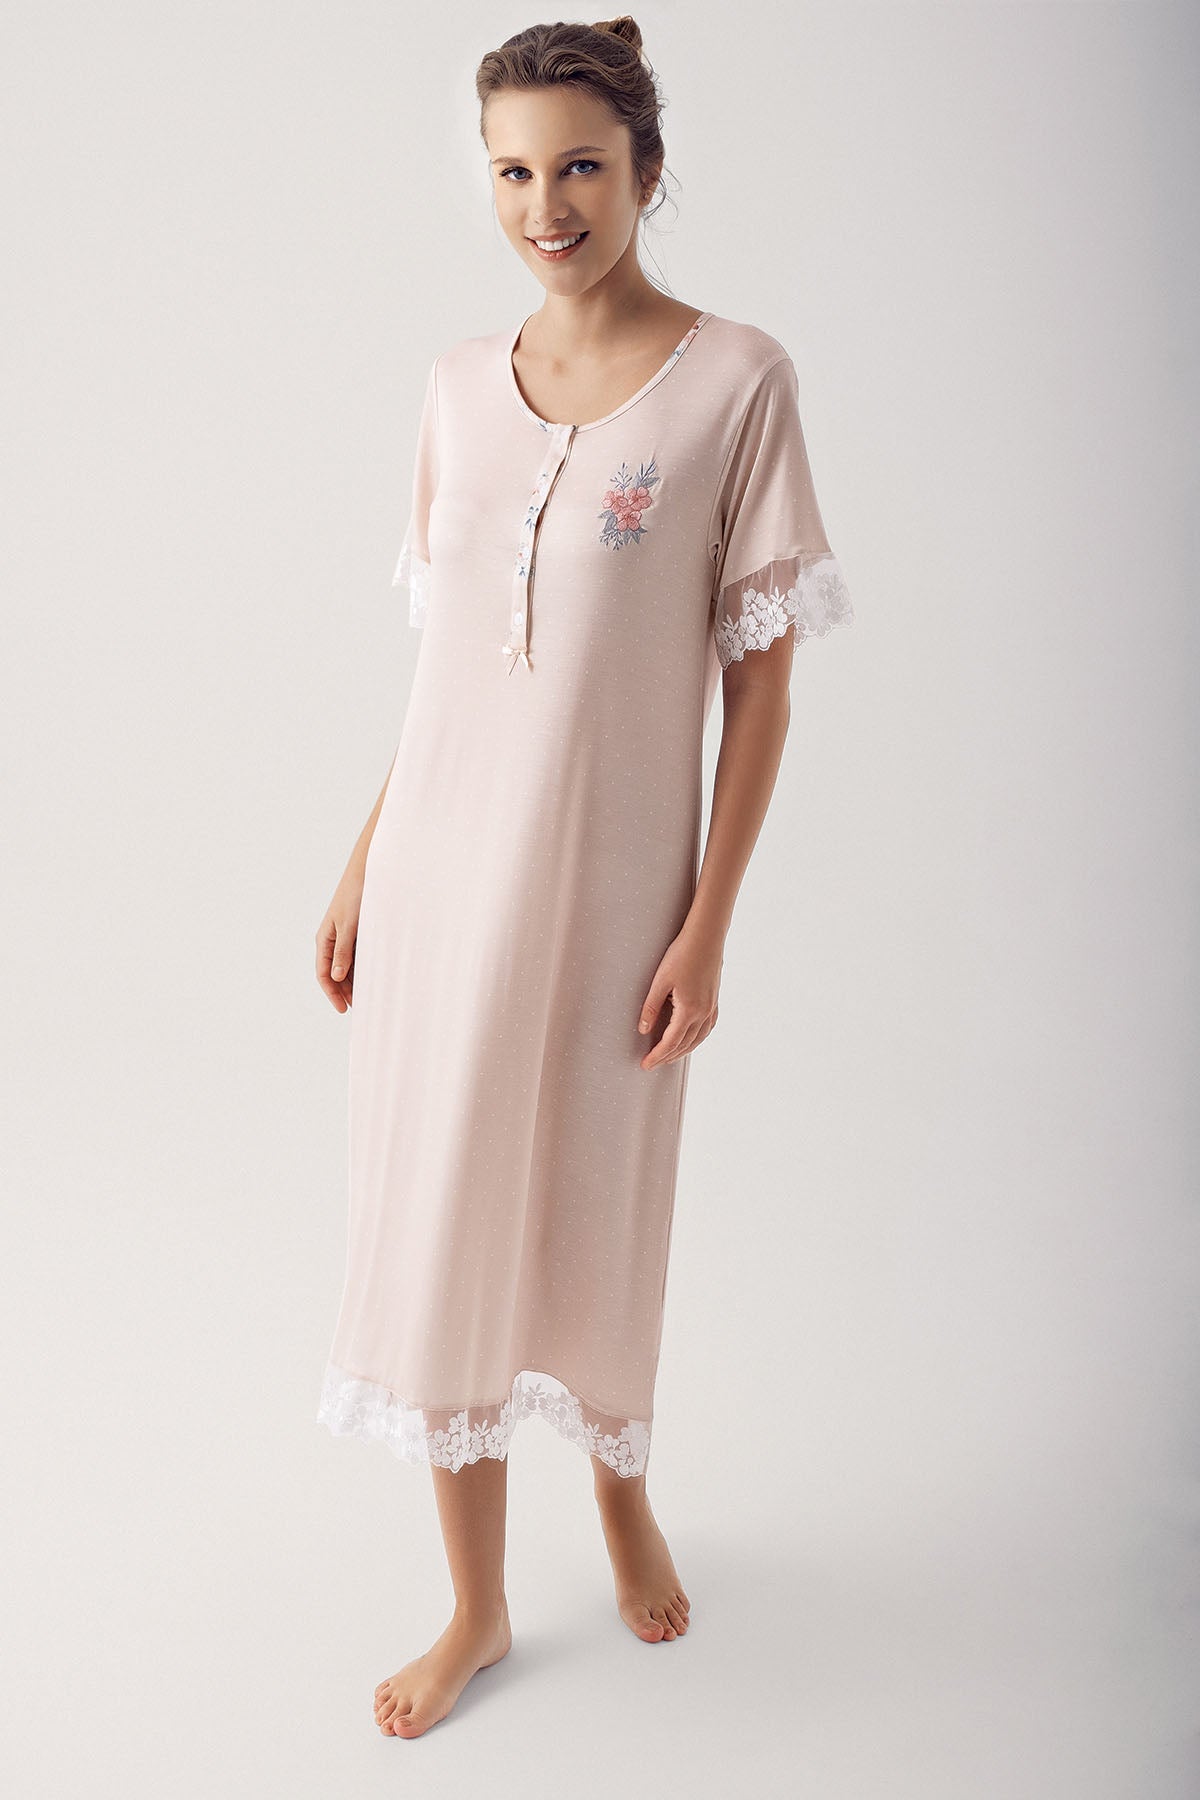 Shopymommy 14123 Embroidery Polka Dot Maternity & Nursing Nightgown Beige